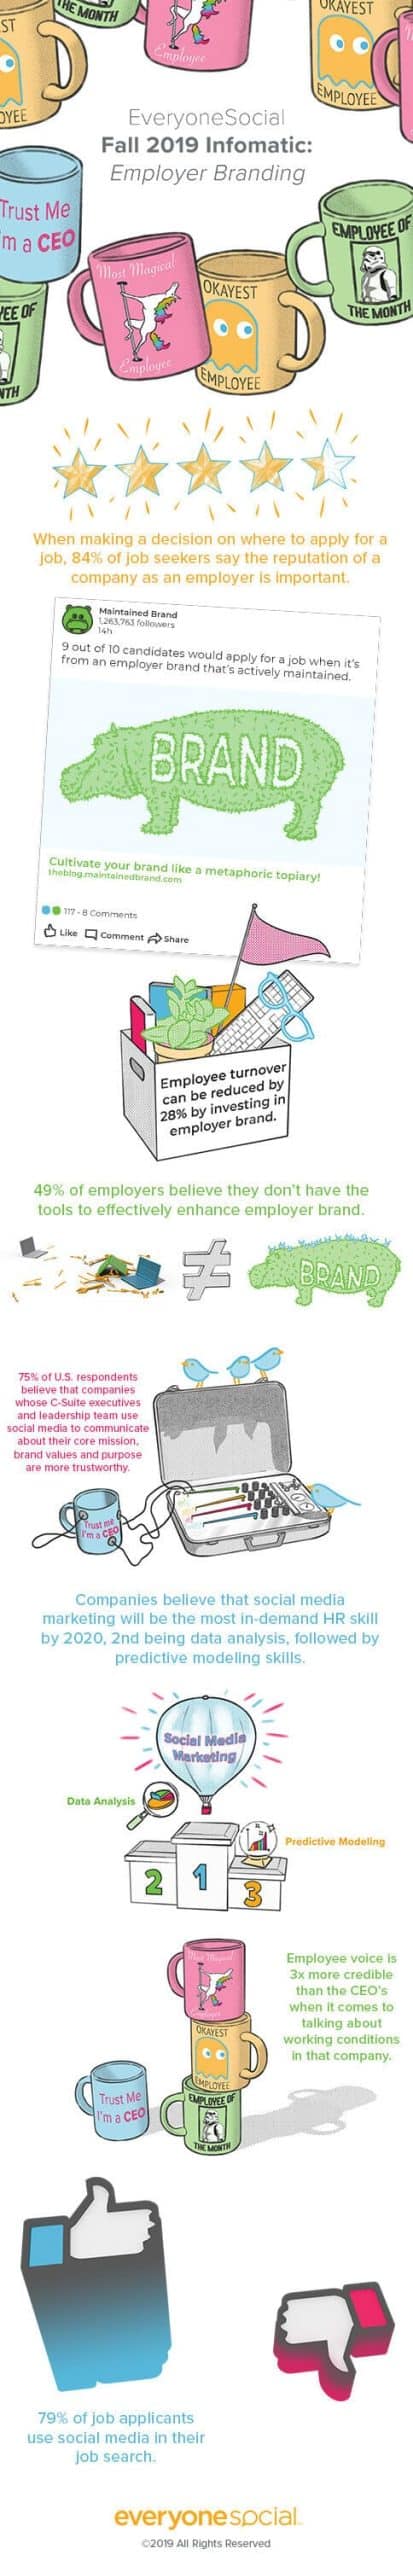 Employer Branding Statistics